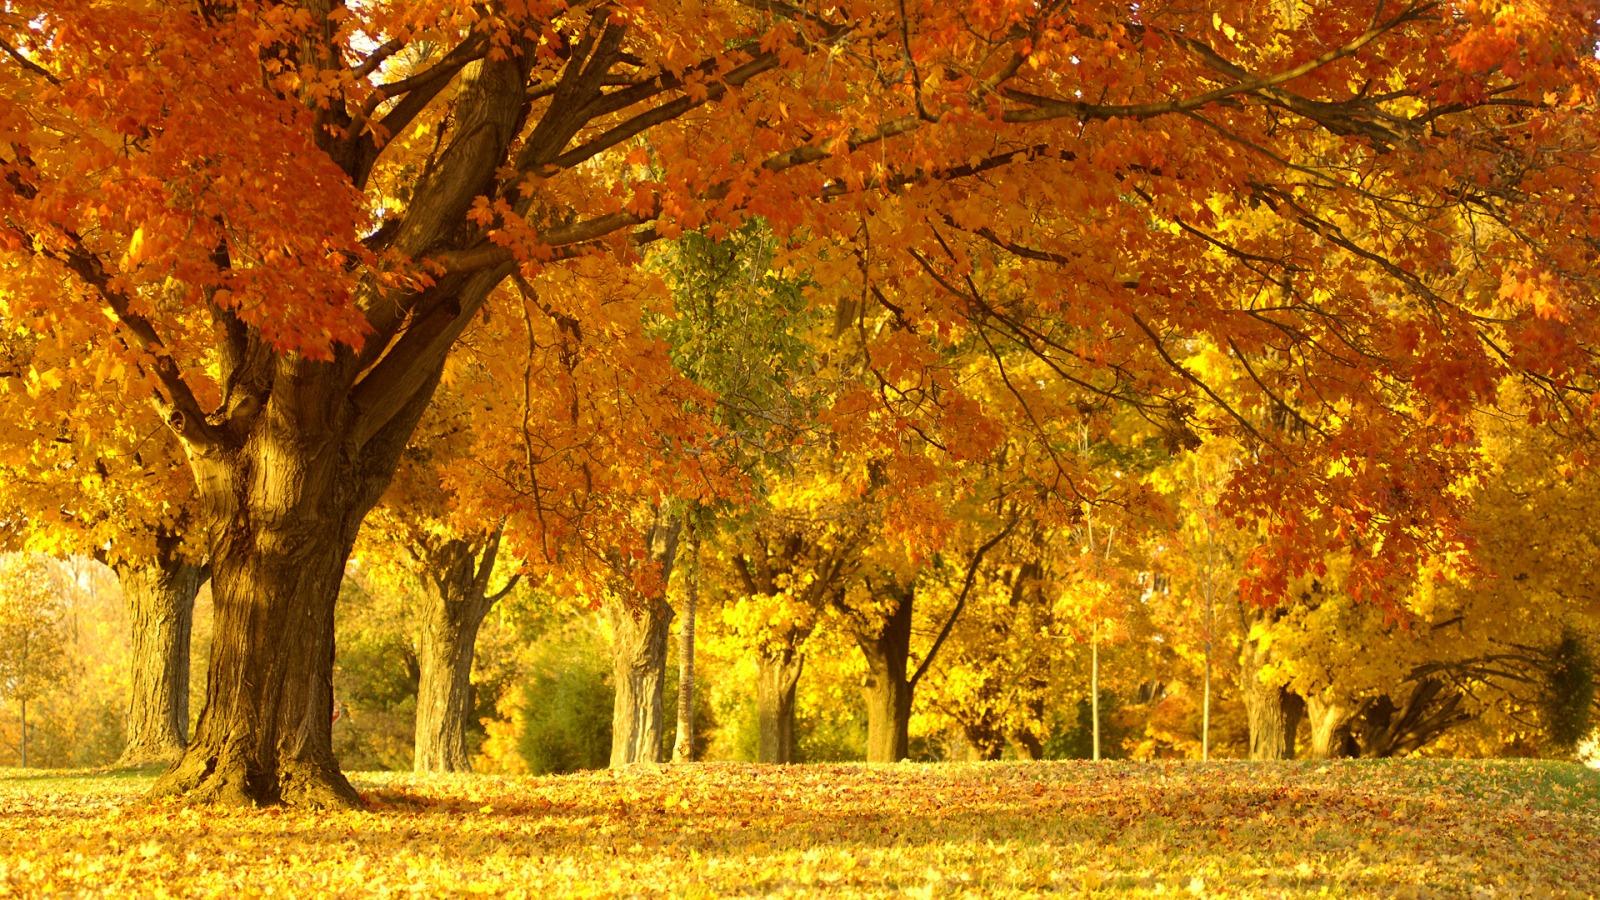 Golden Autumn Tree Wallpaper Autumn Nature Wallpaper in jpg format for free download